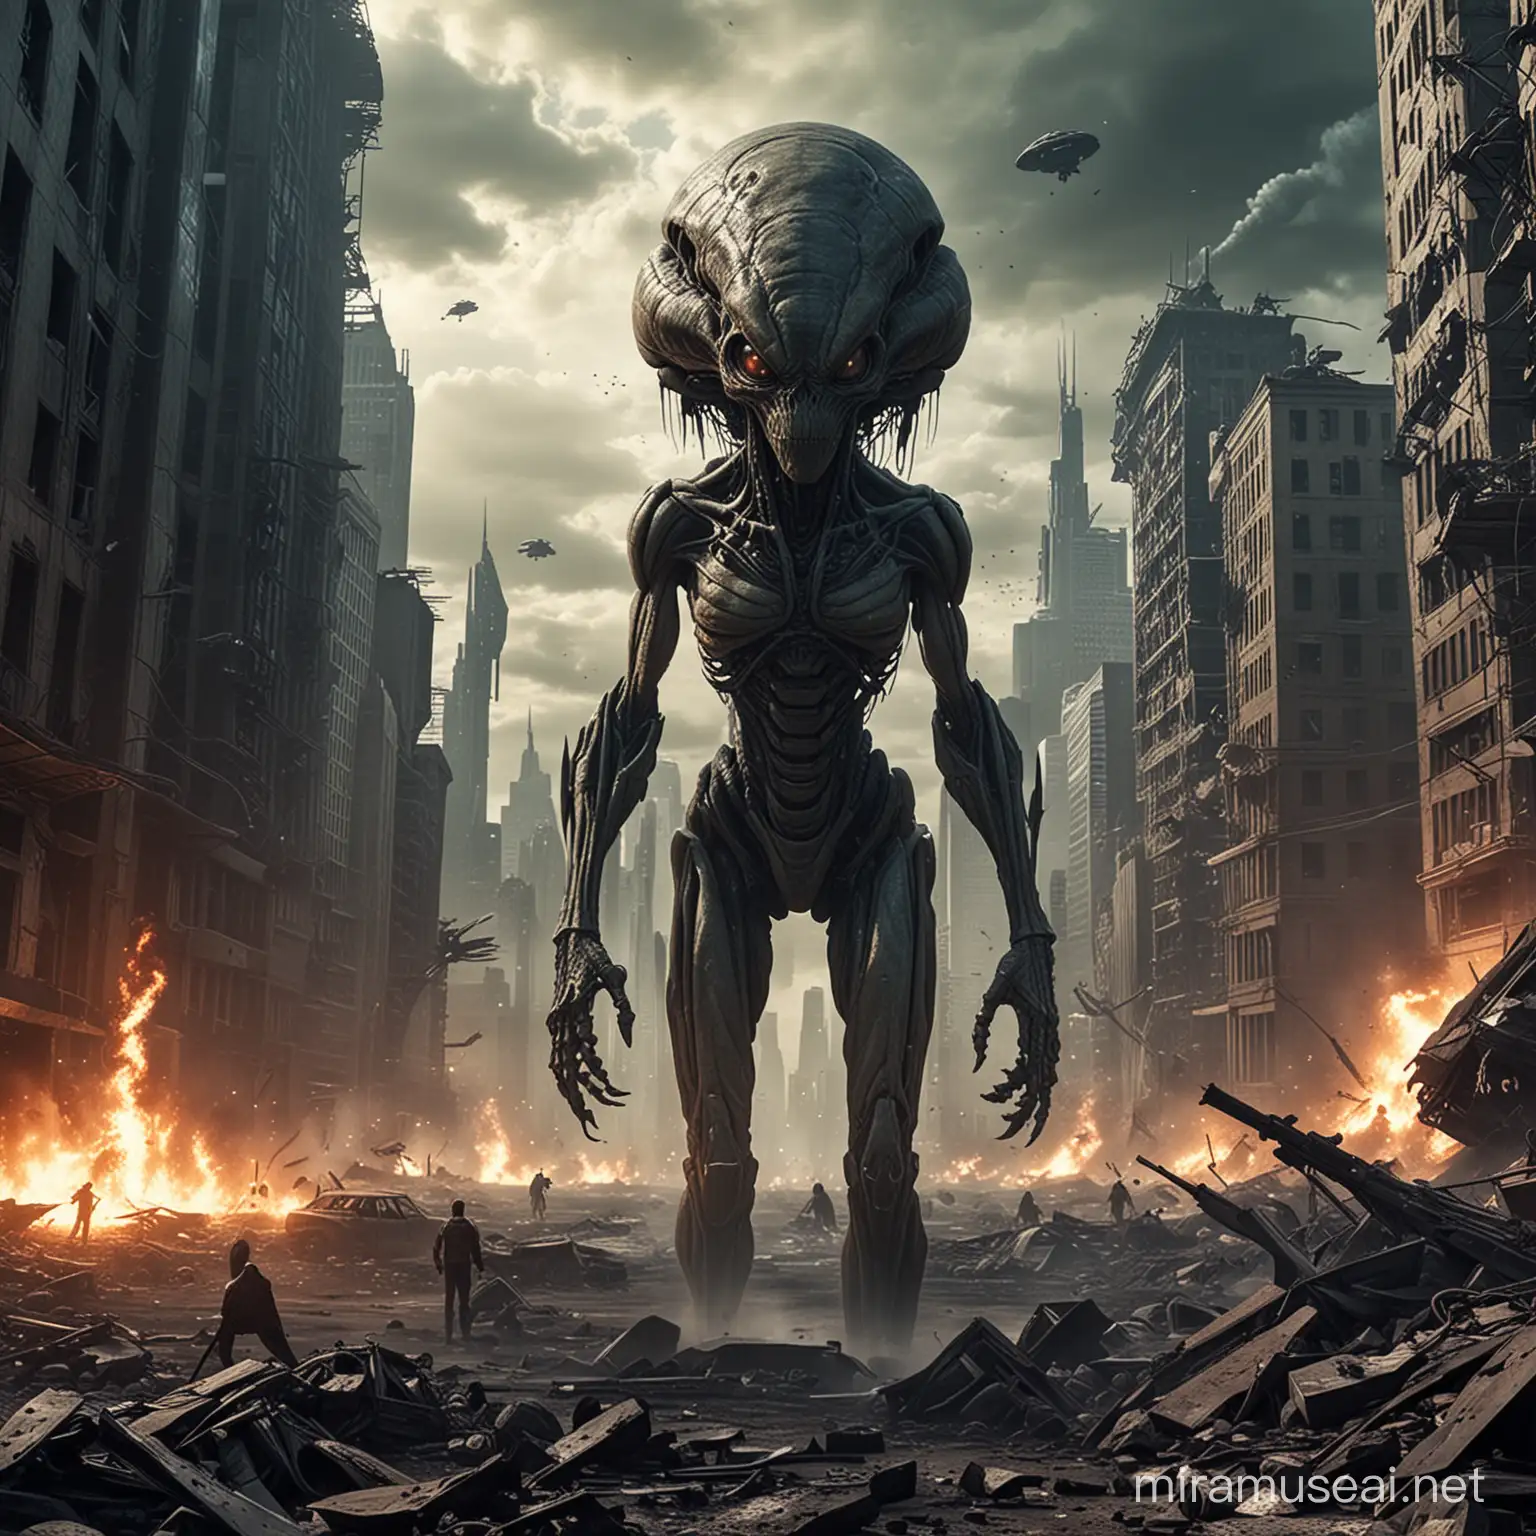 Apocalyptic Battle Humans vs Aliens Devastating Cityscape